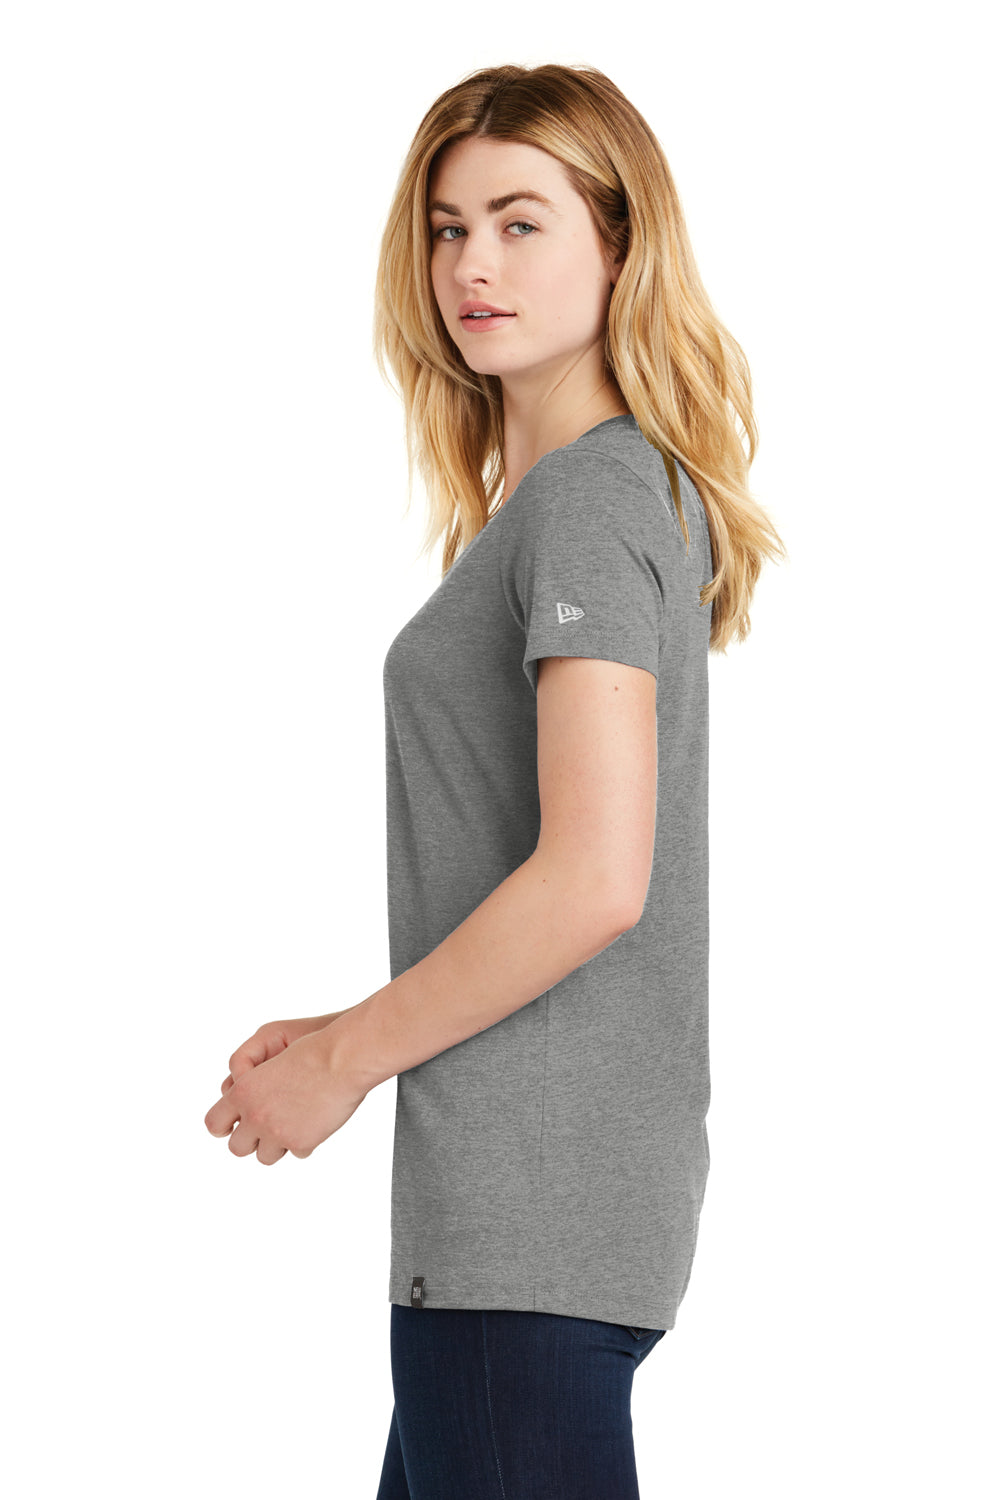 New Era LNEA101 Womens Heritage Short Sleeve V-Neck T-Shirt Heather Shadow Grey Side